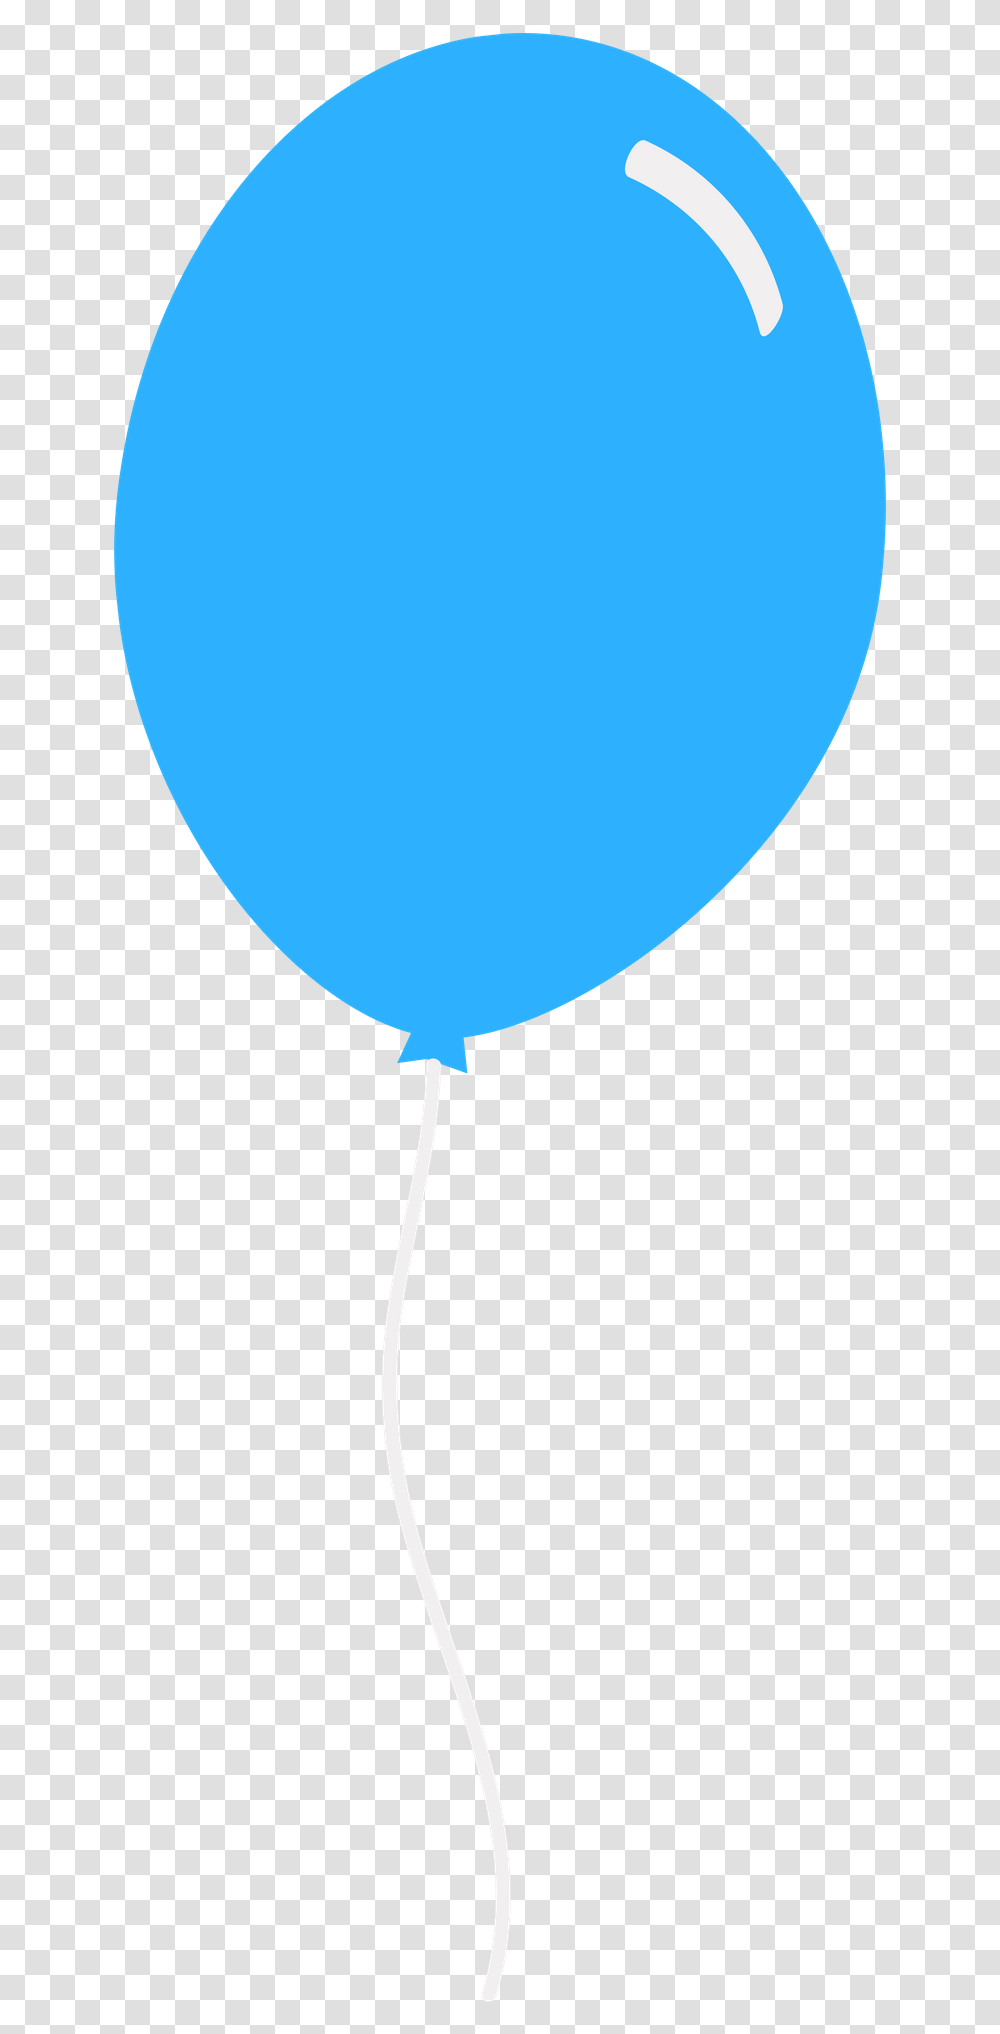 Blue Balloon Balloon Transparent Png